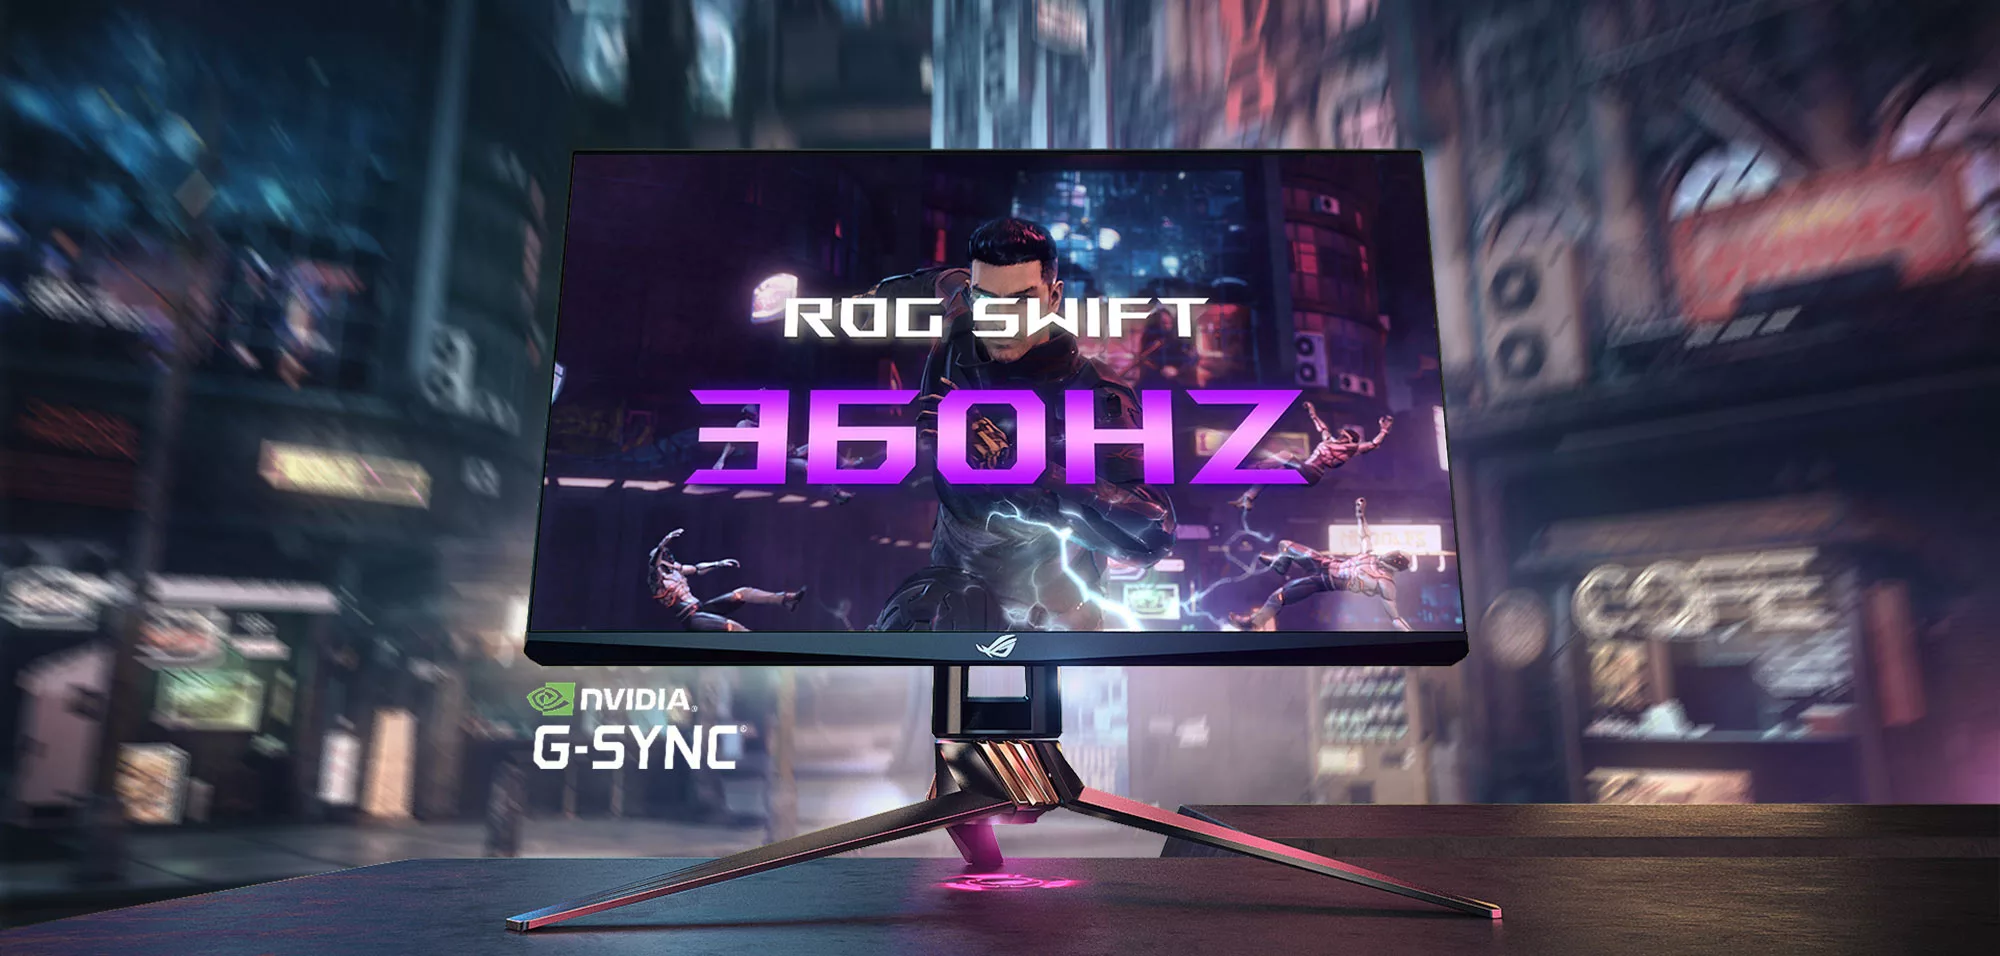 ROG-Swift-360hz-banner